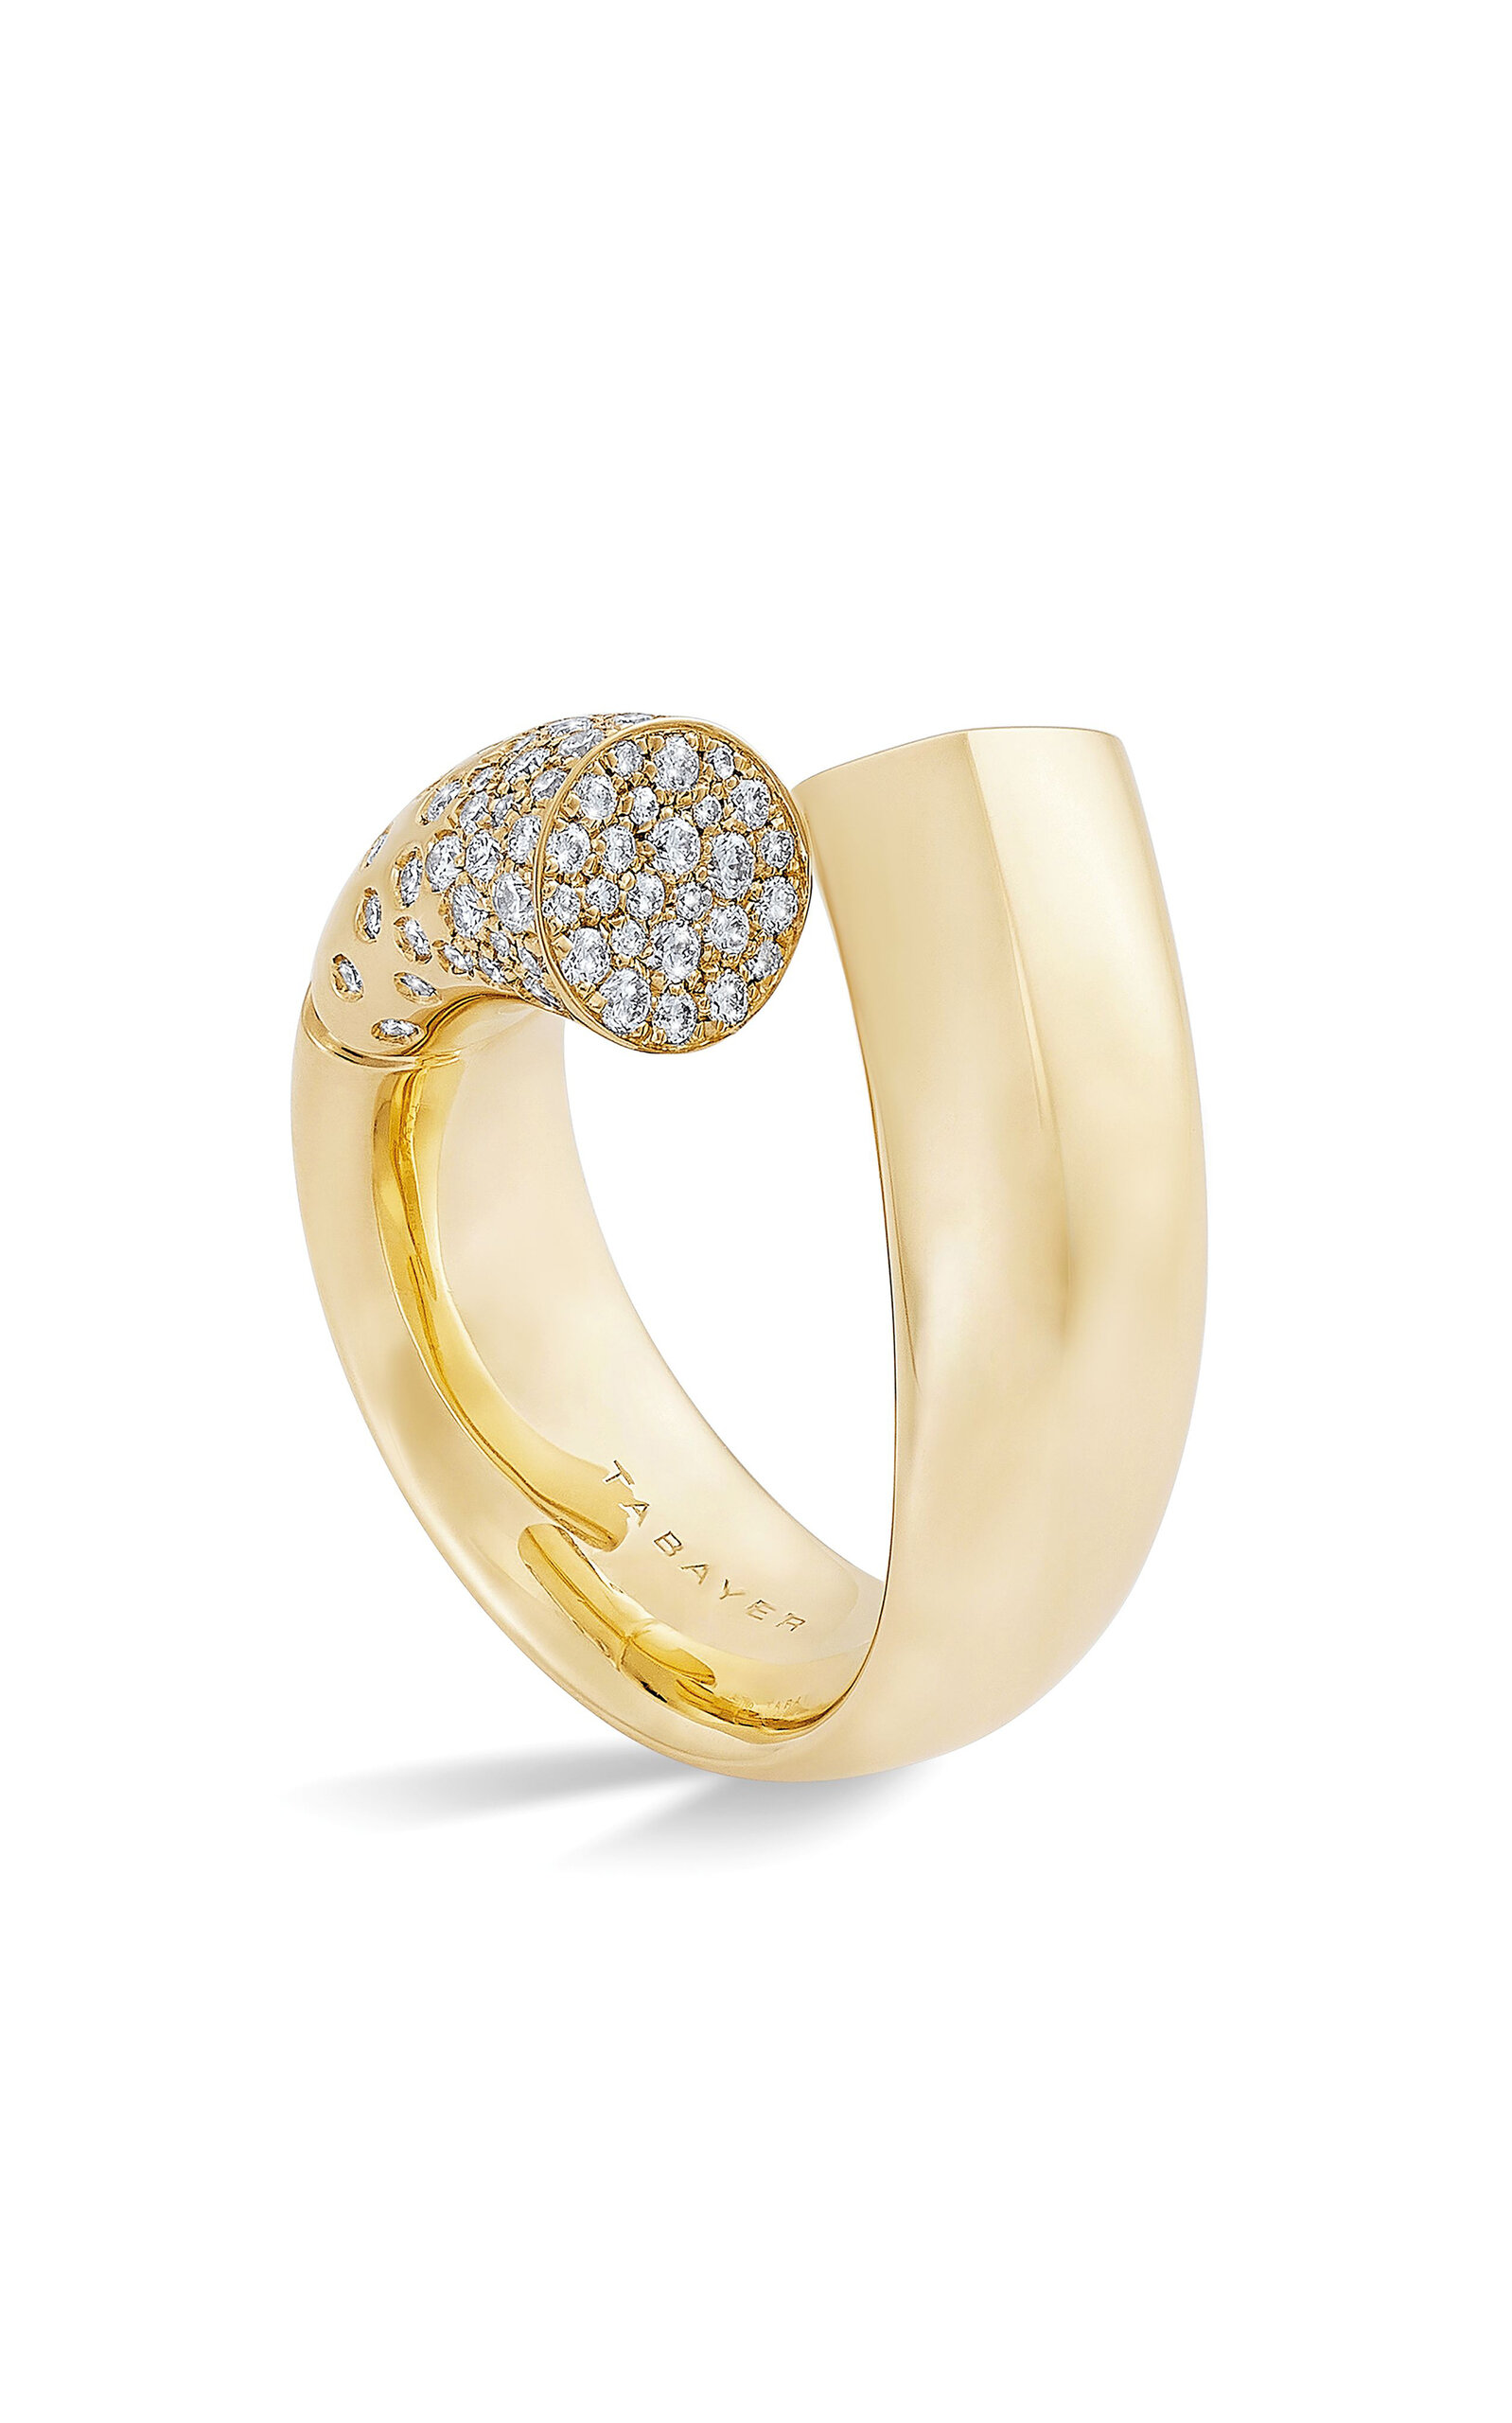 Oera Large 18K Fairmined Yellow Gold Diamond Ring